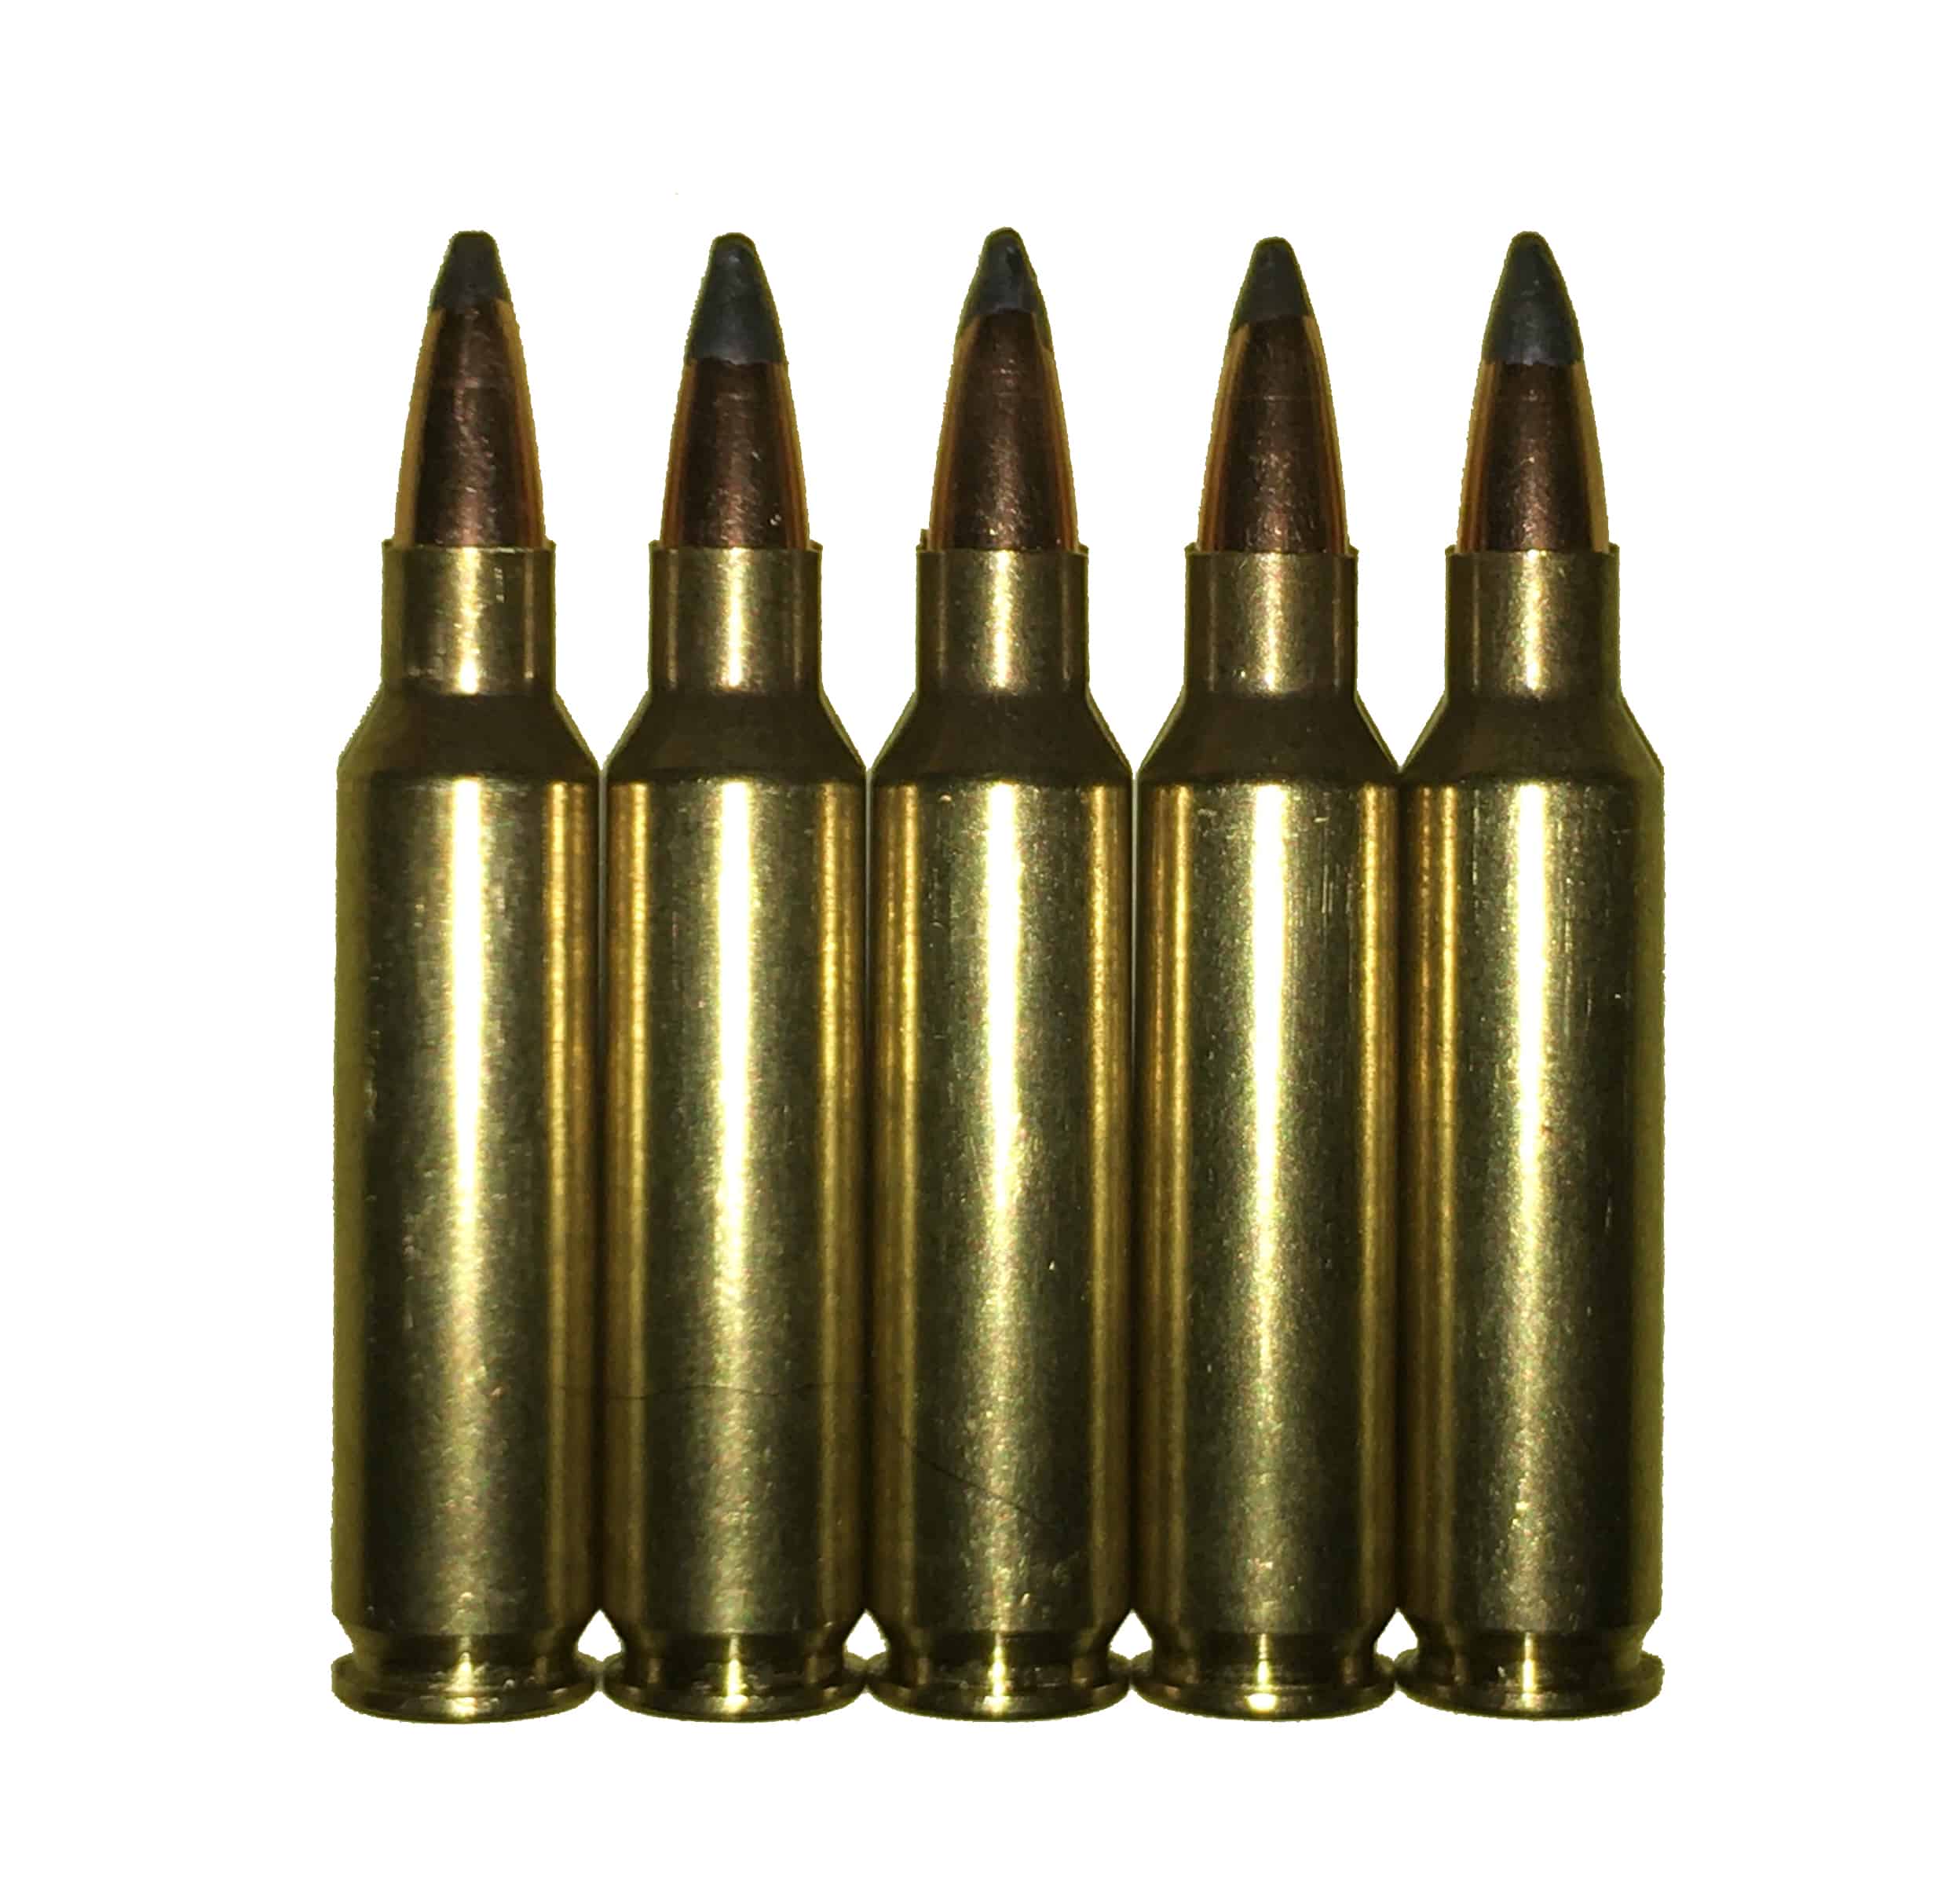 6mm Hagar Dummy Rounds Snap Caps Fake Bullets J&M Spec INERT